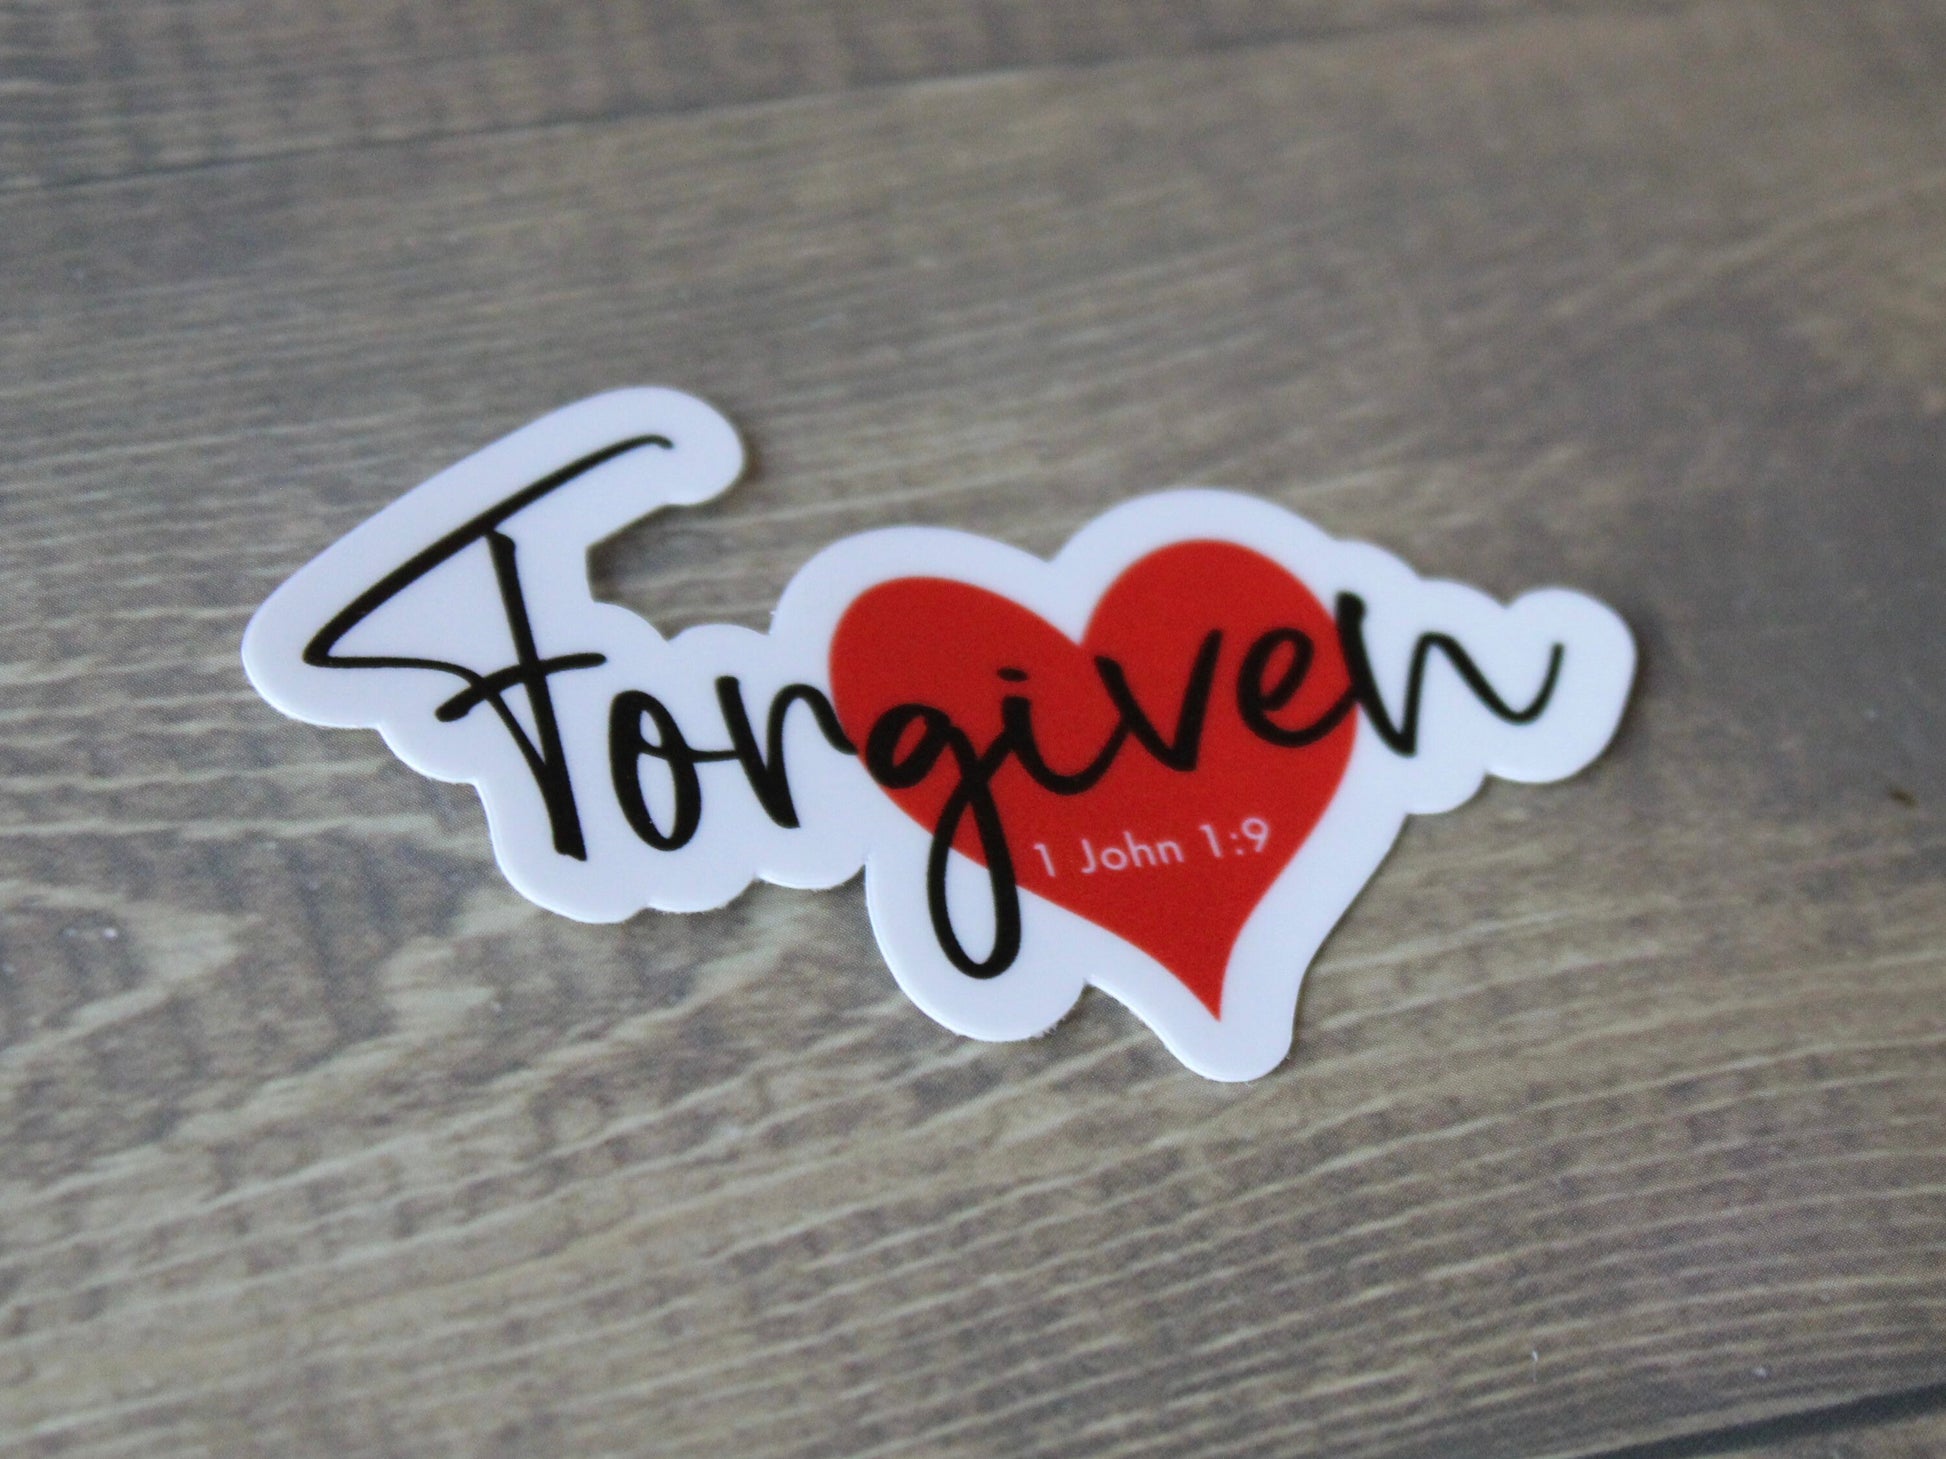 Forgiven - 1 John 1:9 -Red Heart Christian Faith UV/ Waterproof Vinyl Sticker/ Decal- Choice of Size, Single or Bulk qty